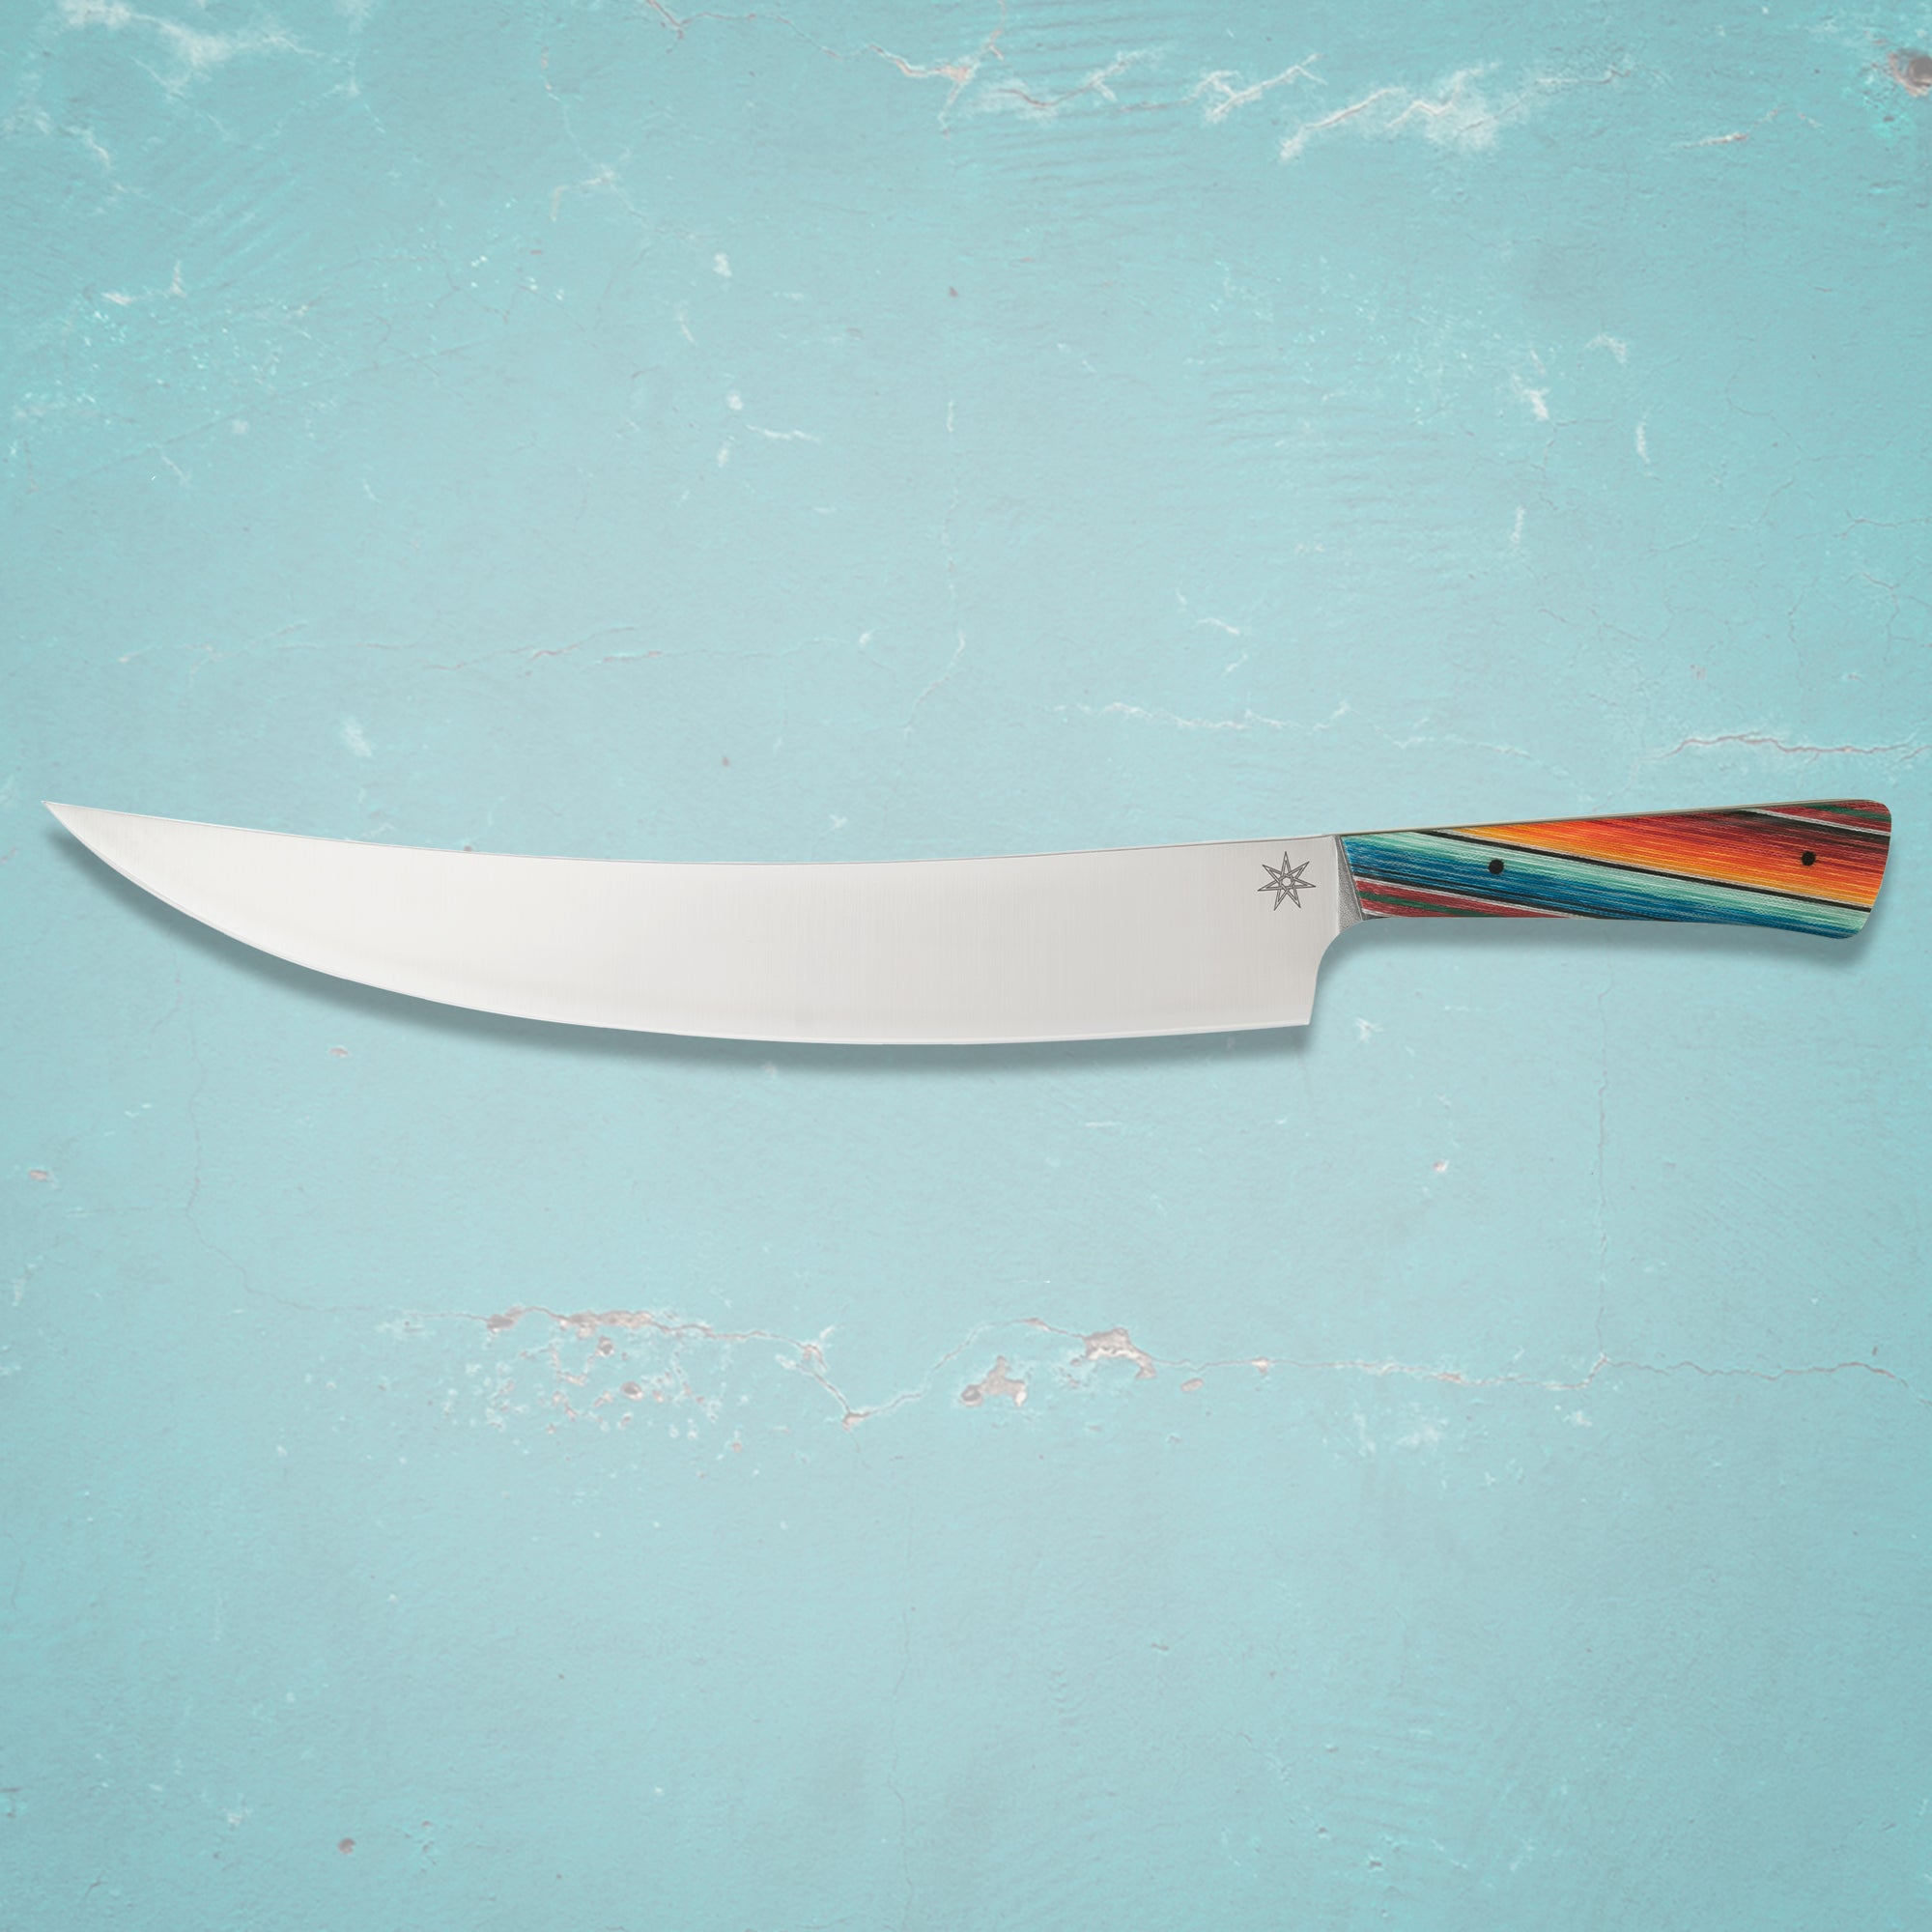 Town Cutler Scimitar Butcher Knife from Baja Knife Line